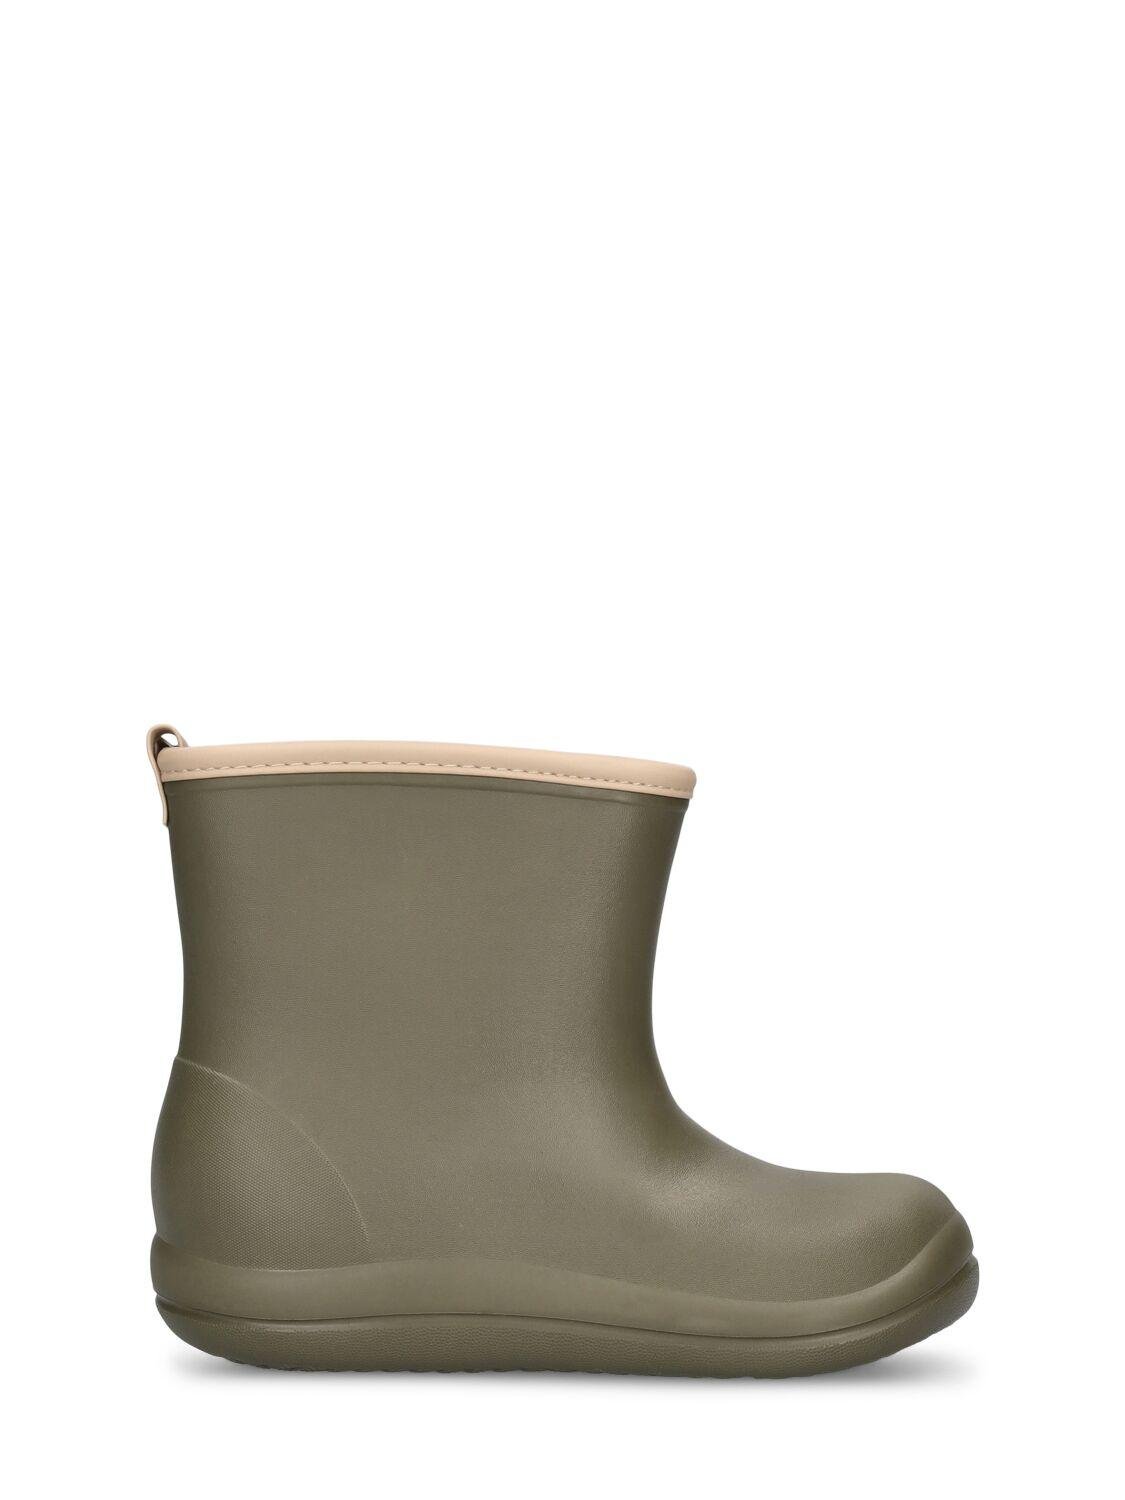 Rubber Rain Boots by KONGES SLOJD